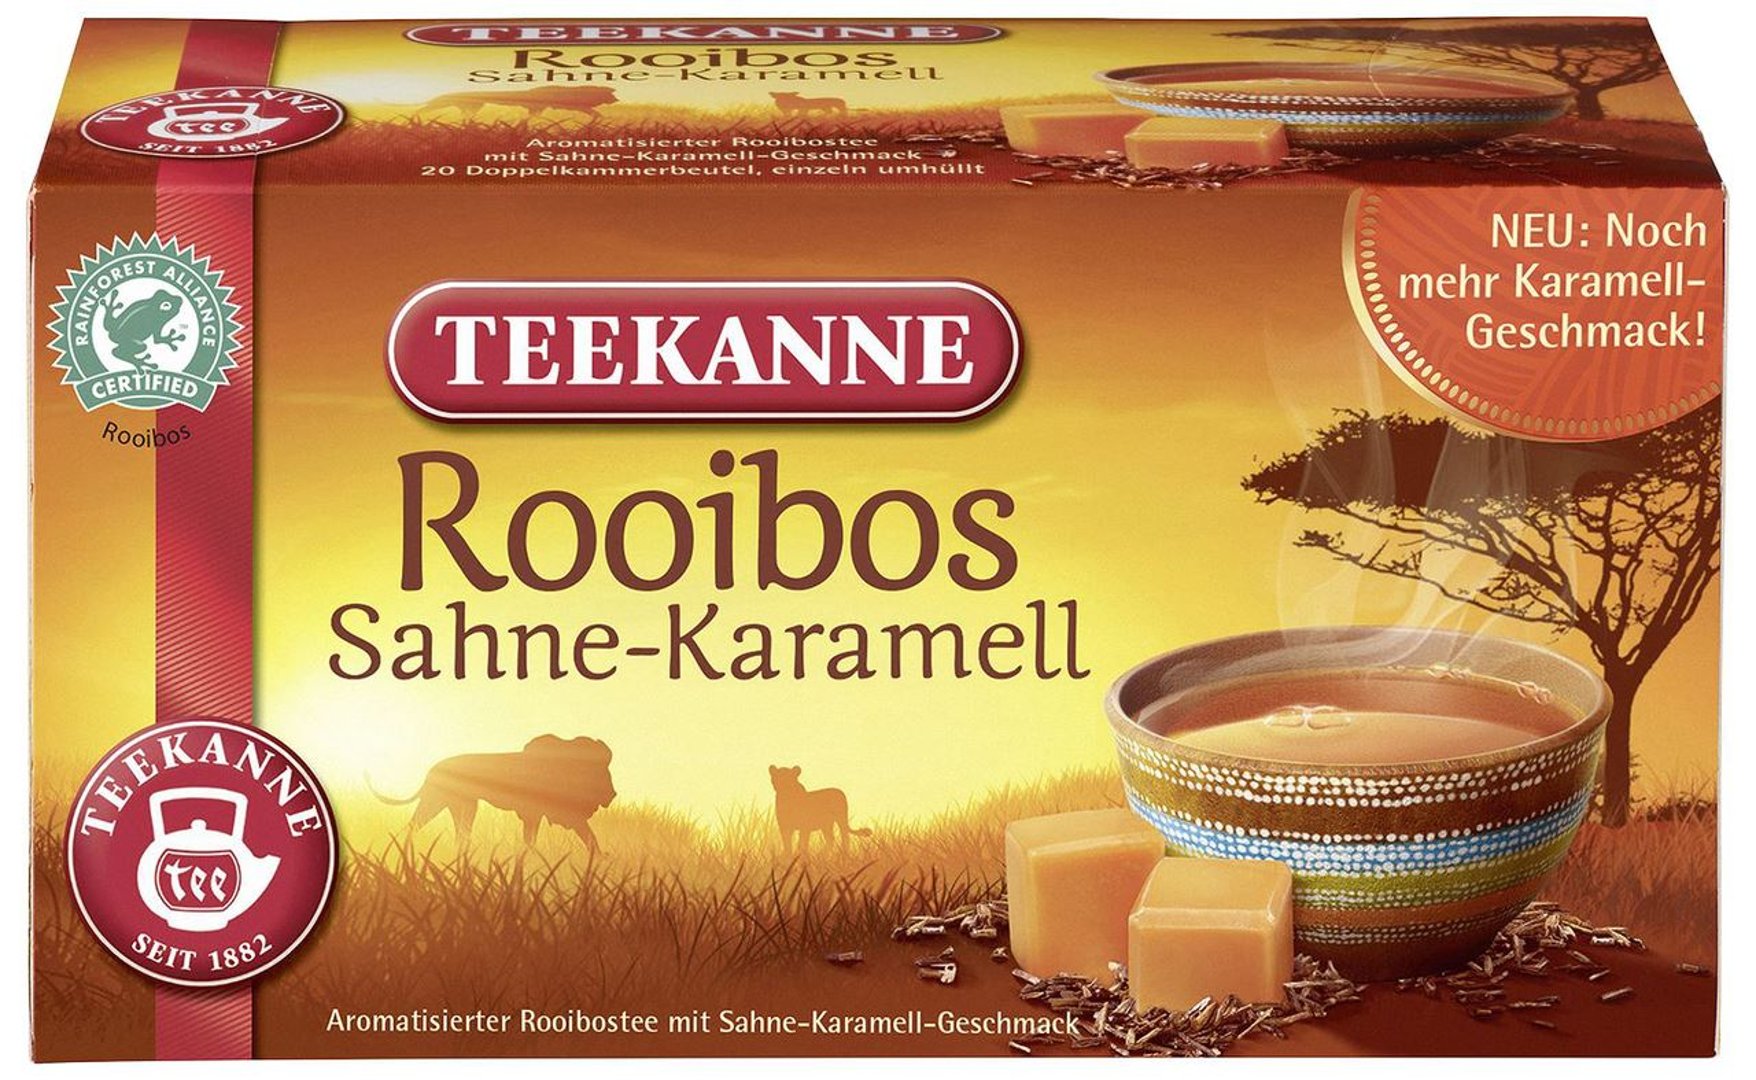 Teekanne - Rooibos Sahne-Karamell Teebeutel - 1 x 35 g Packung